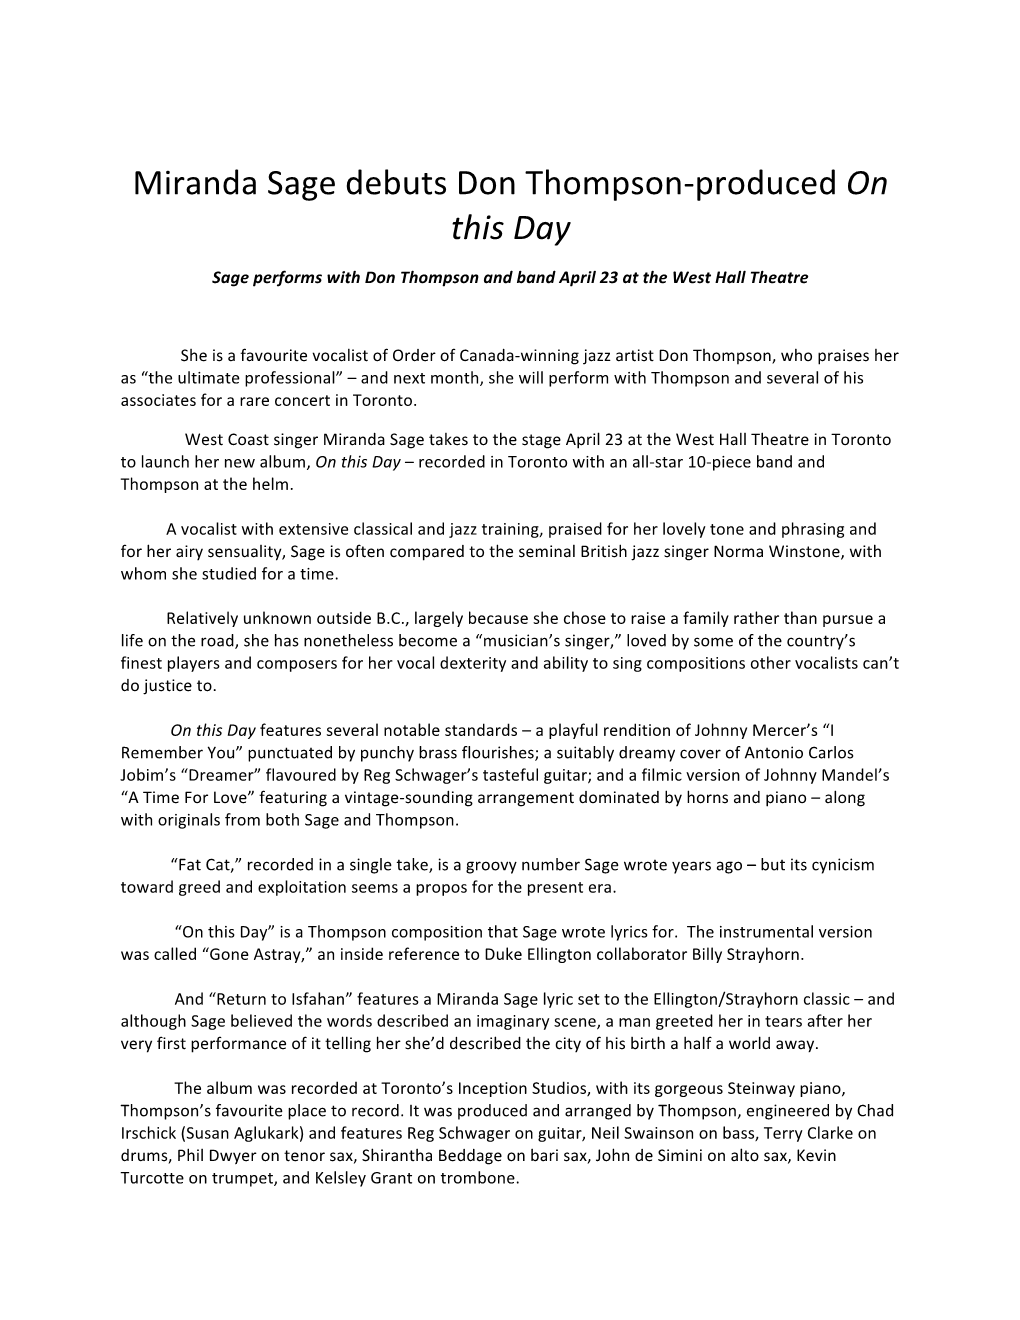 Miranda Sage Release